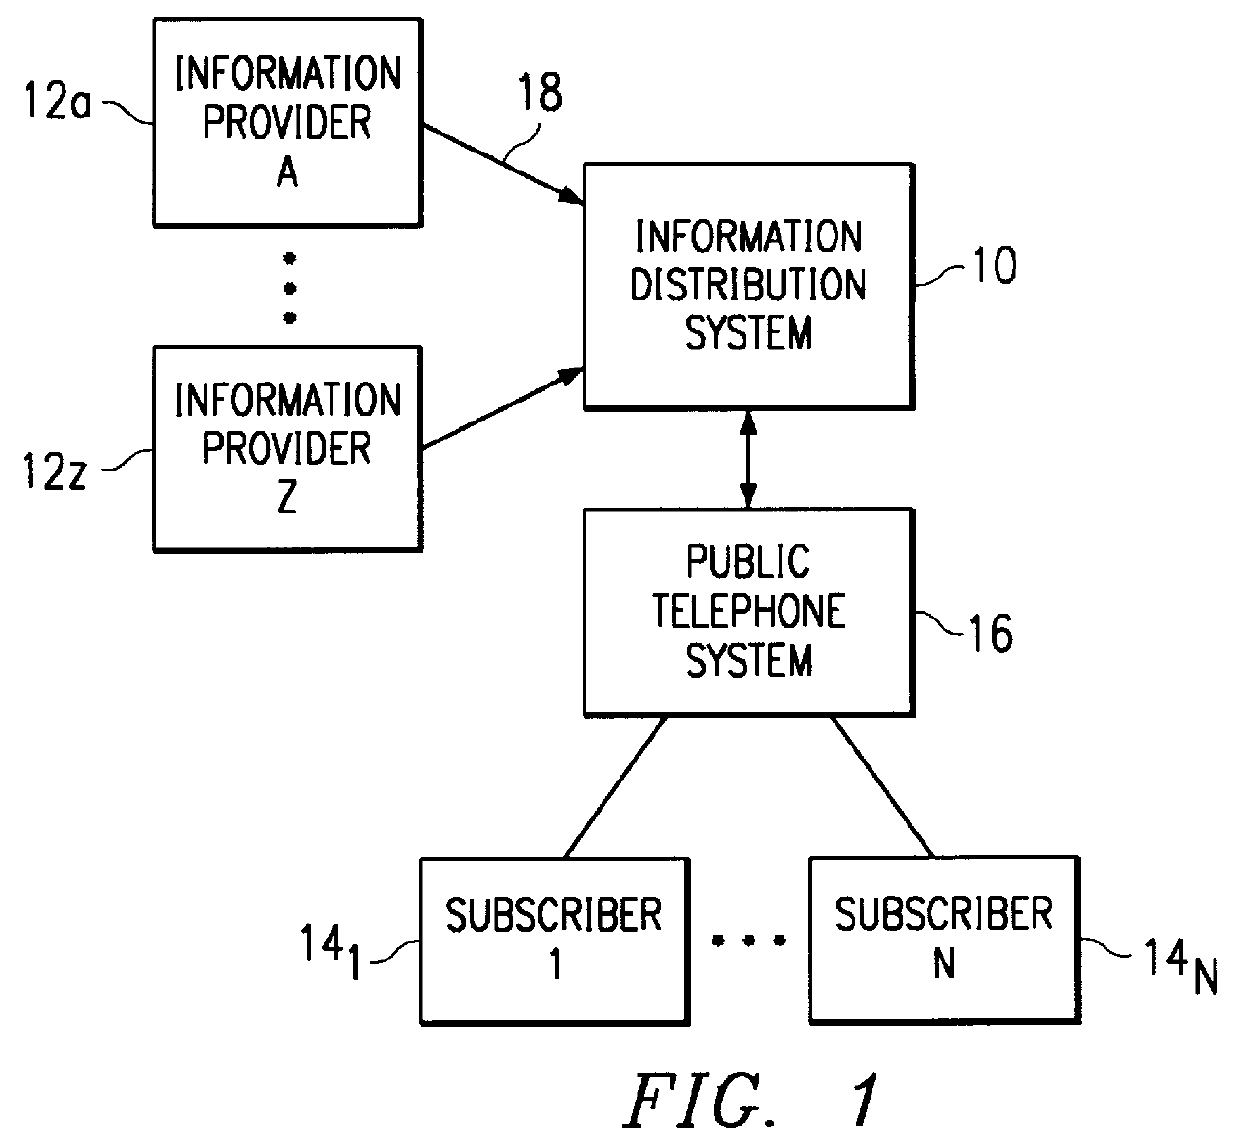 Information distribution system